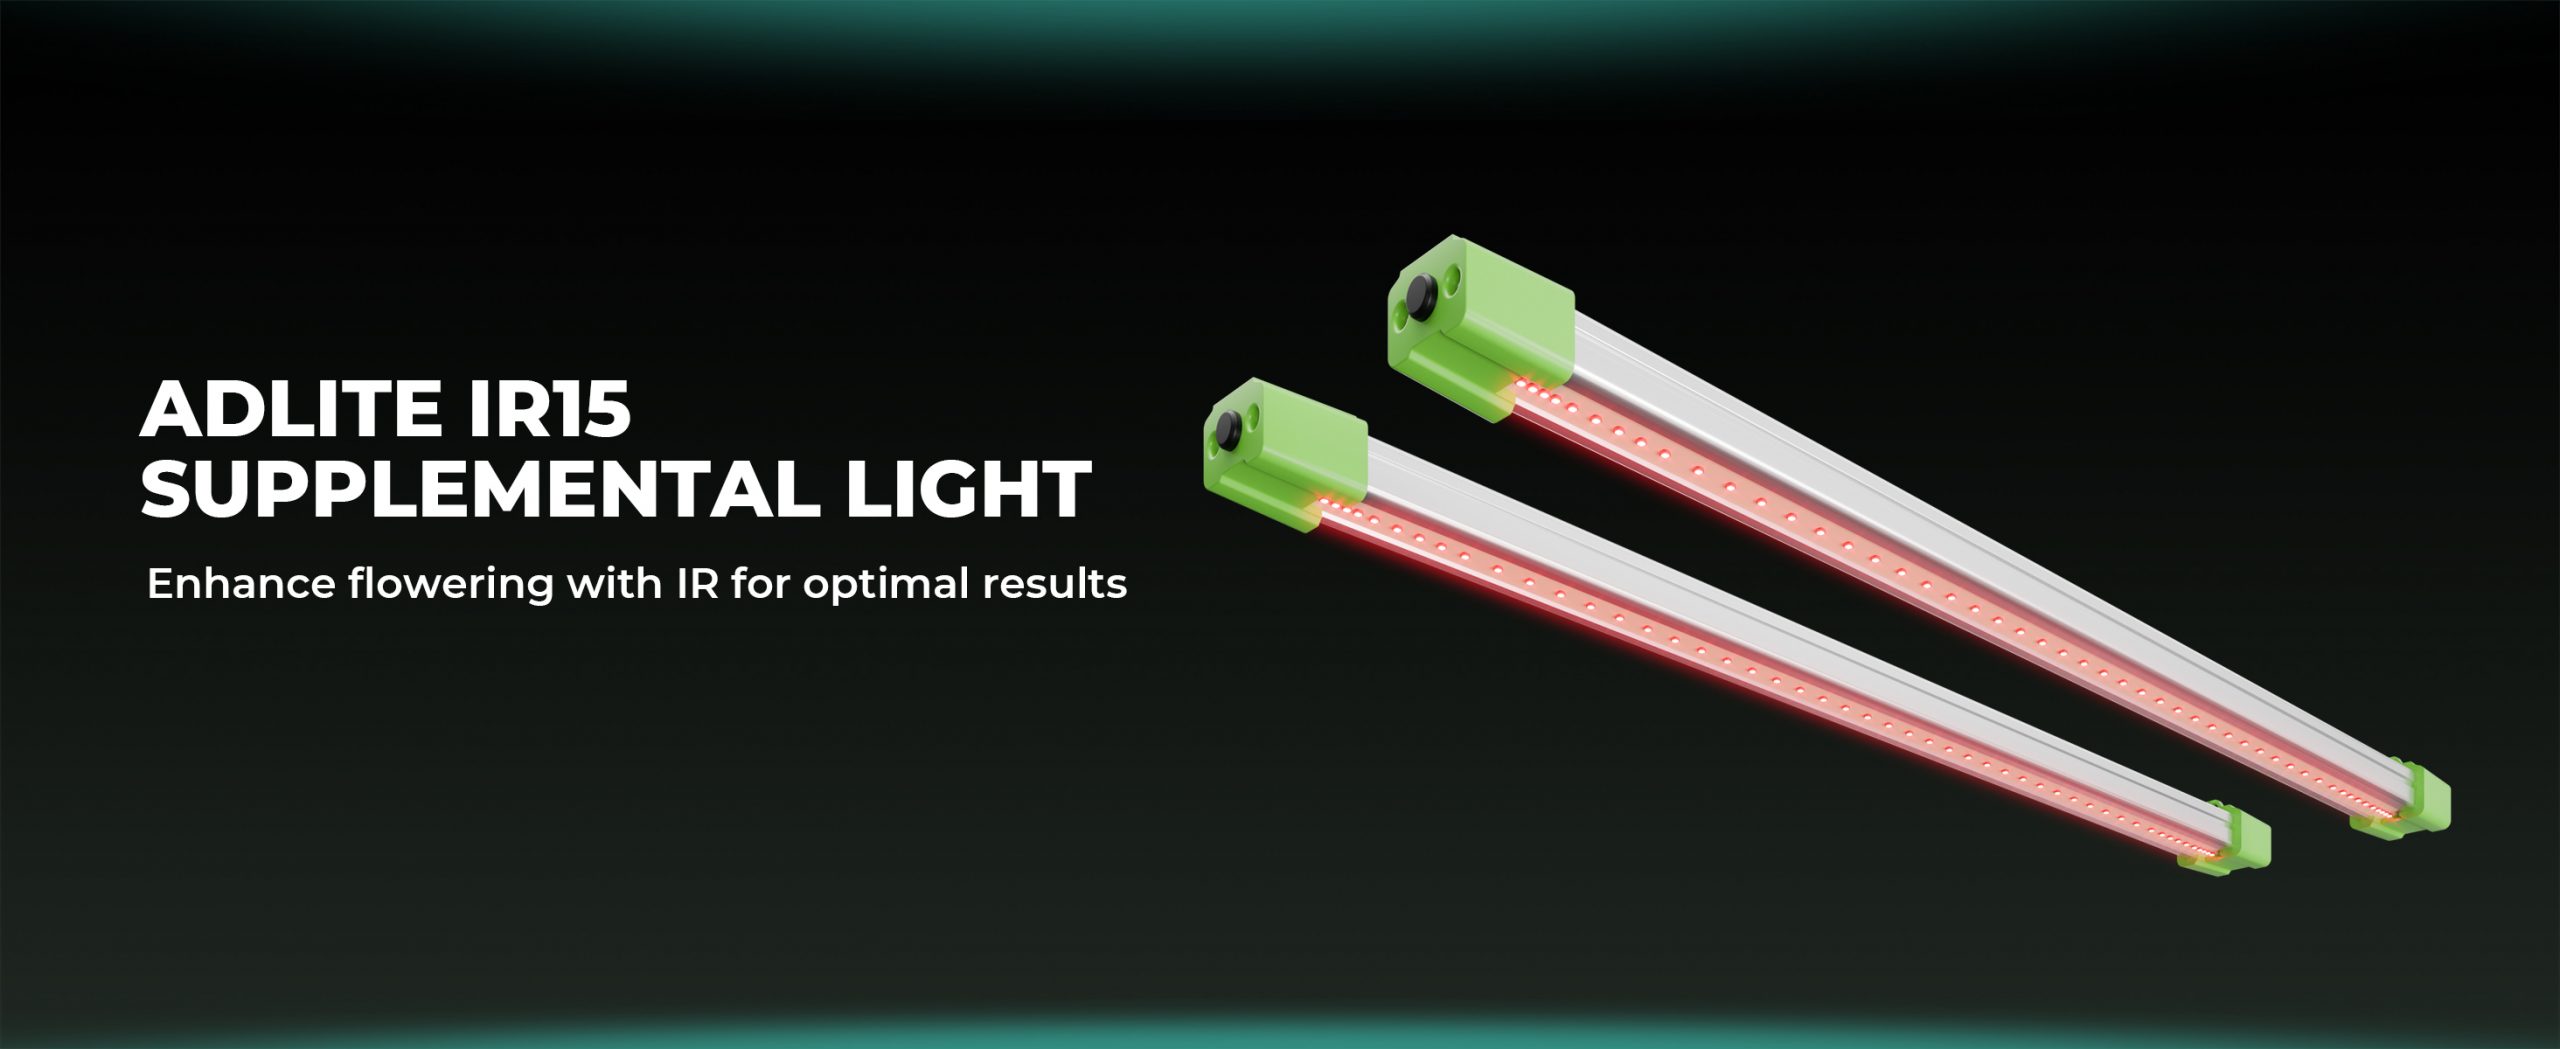 adlite ir15 supplemental led light